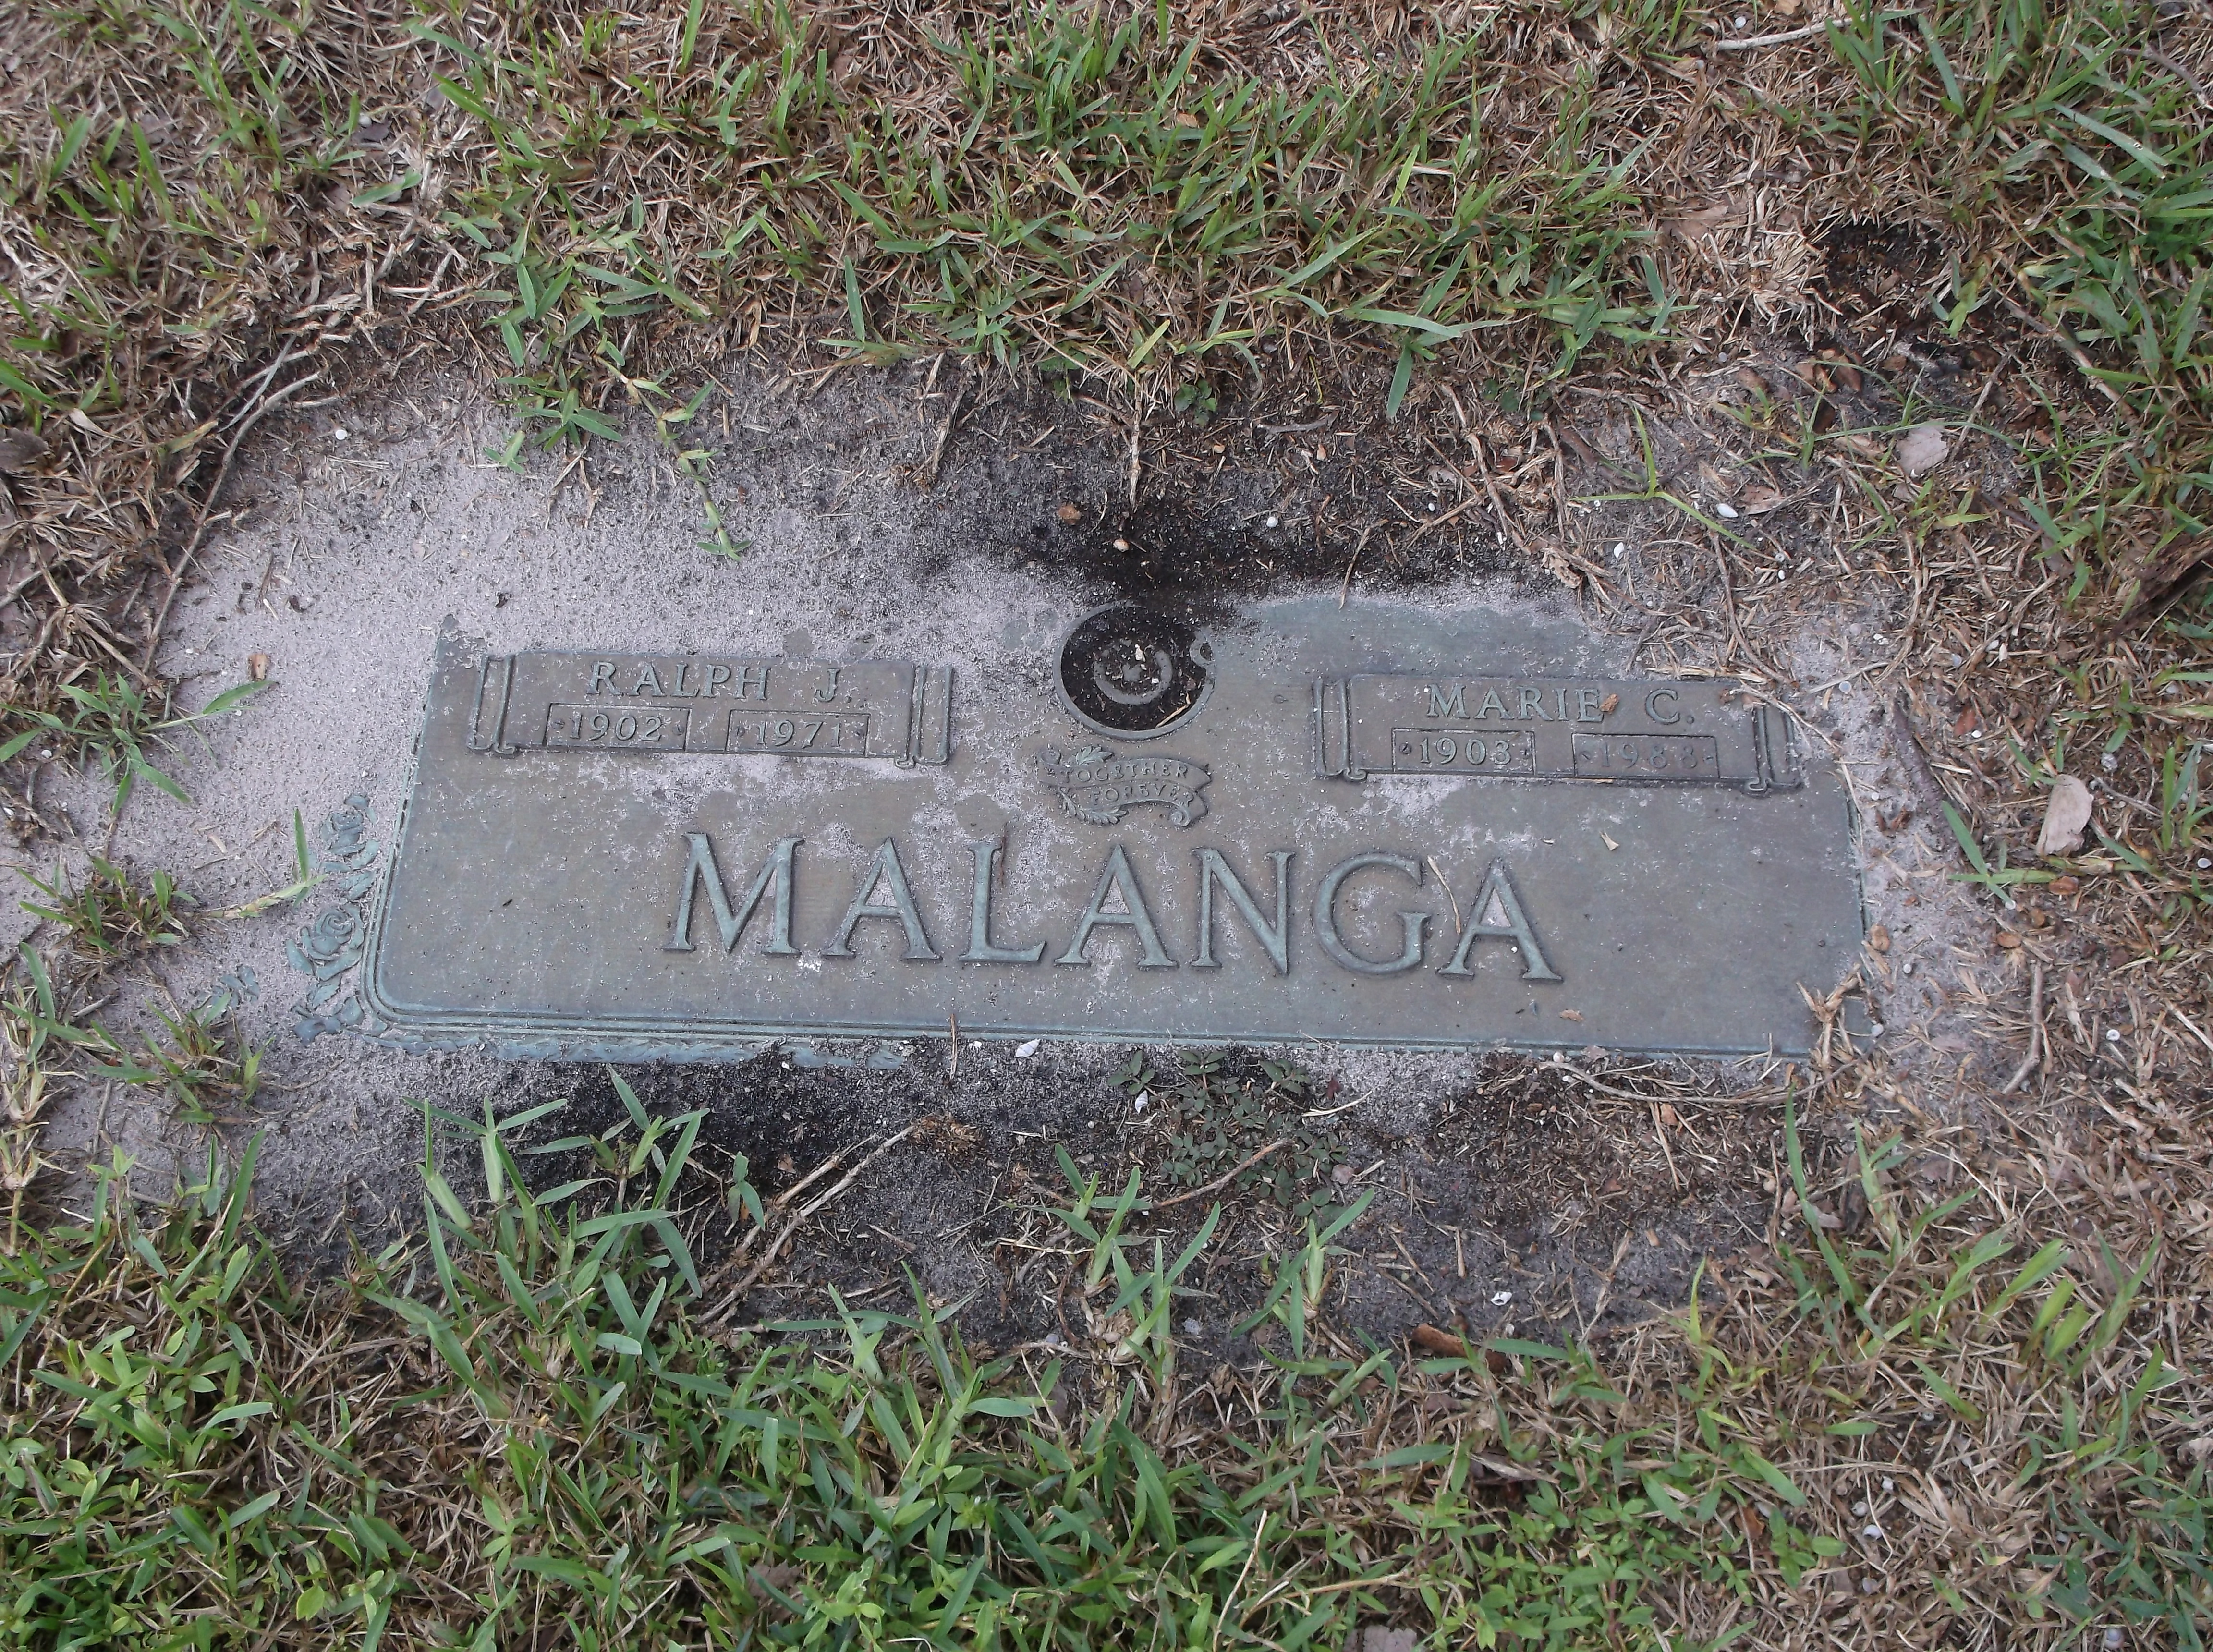 Marie C Malanga